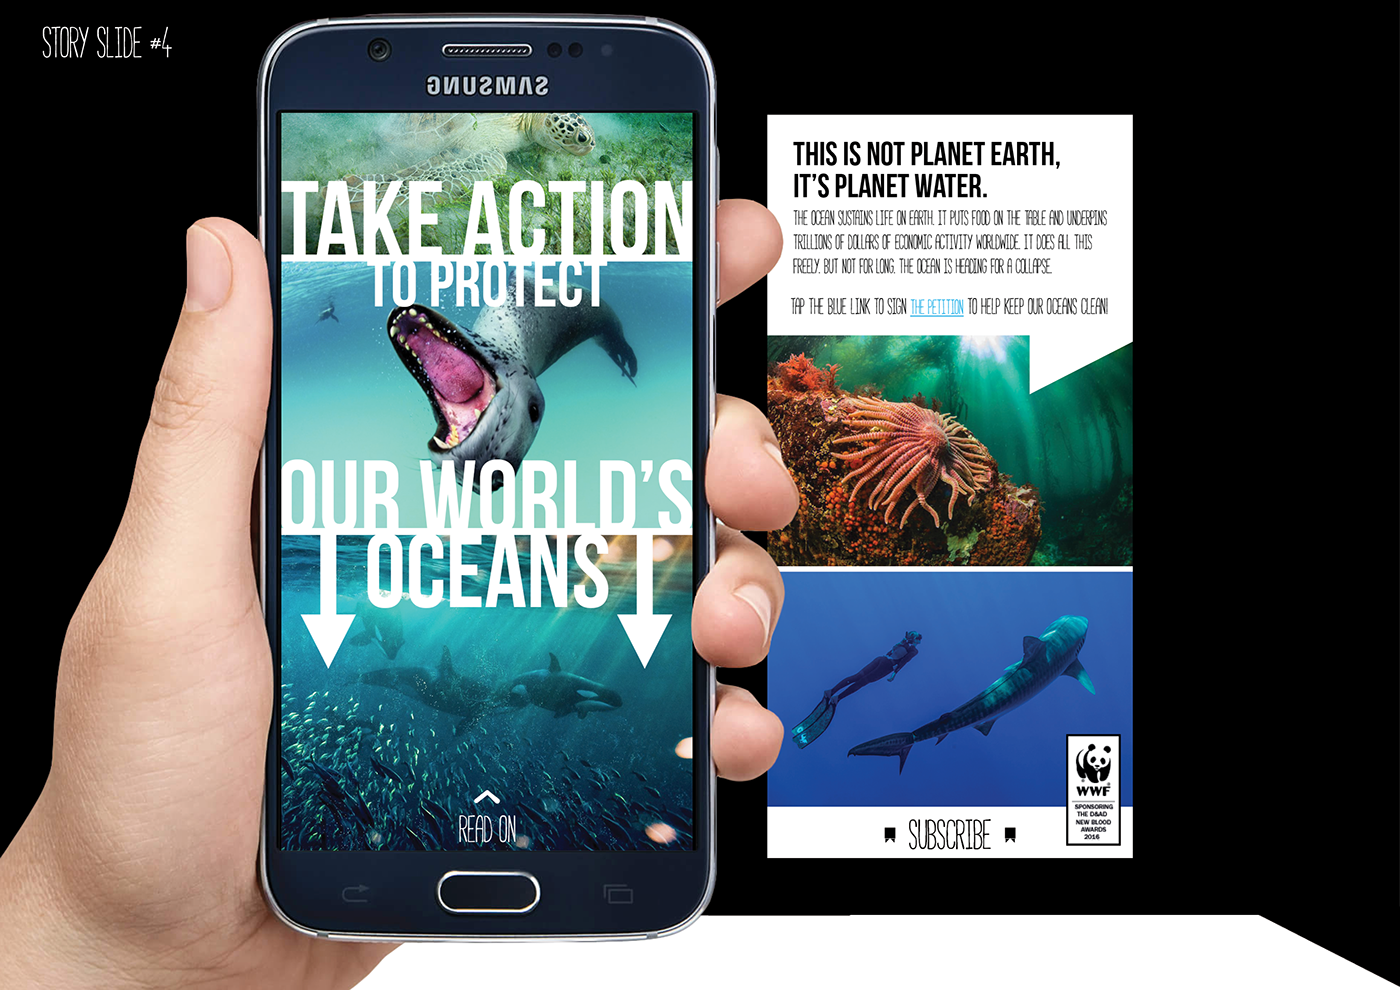 WWF snapchat social media teens Advertising  campaign partnership collaberation wild life global warming